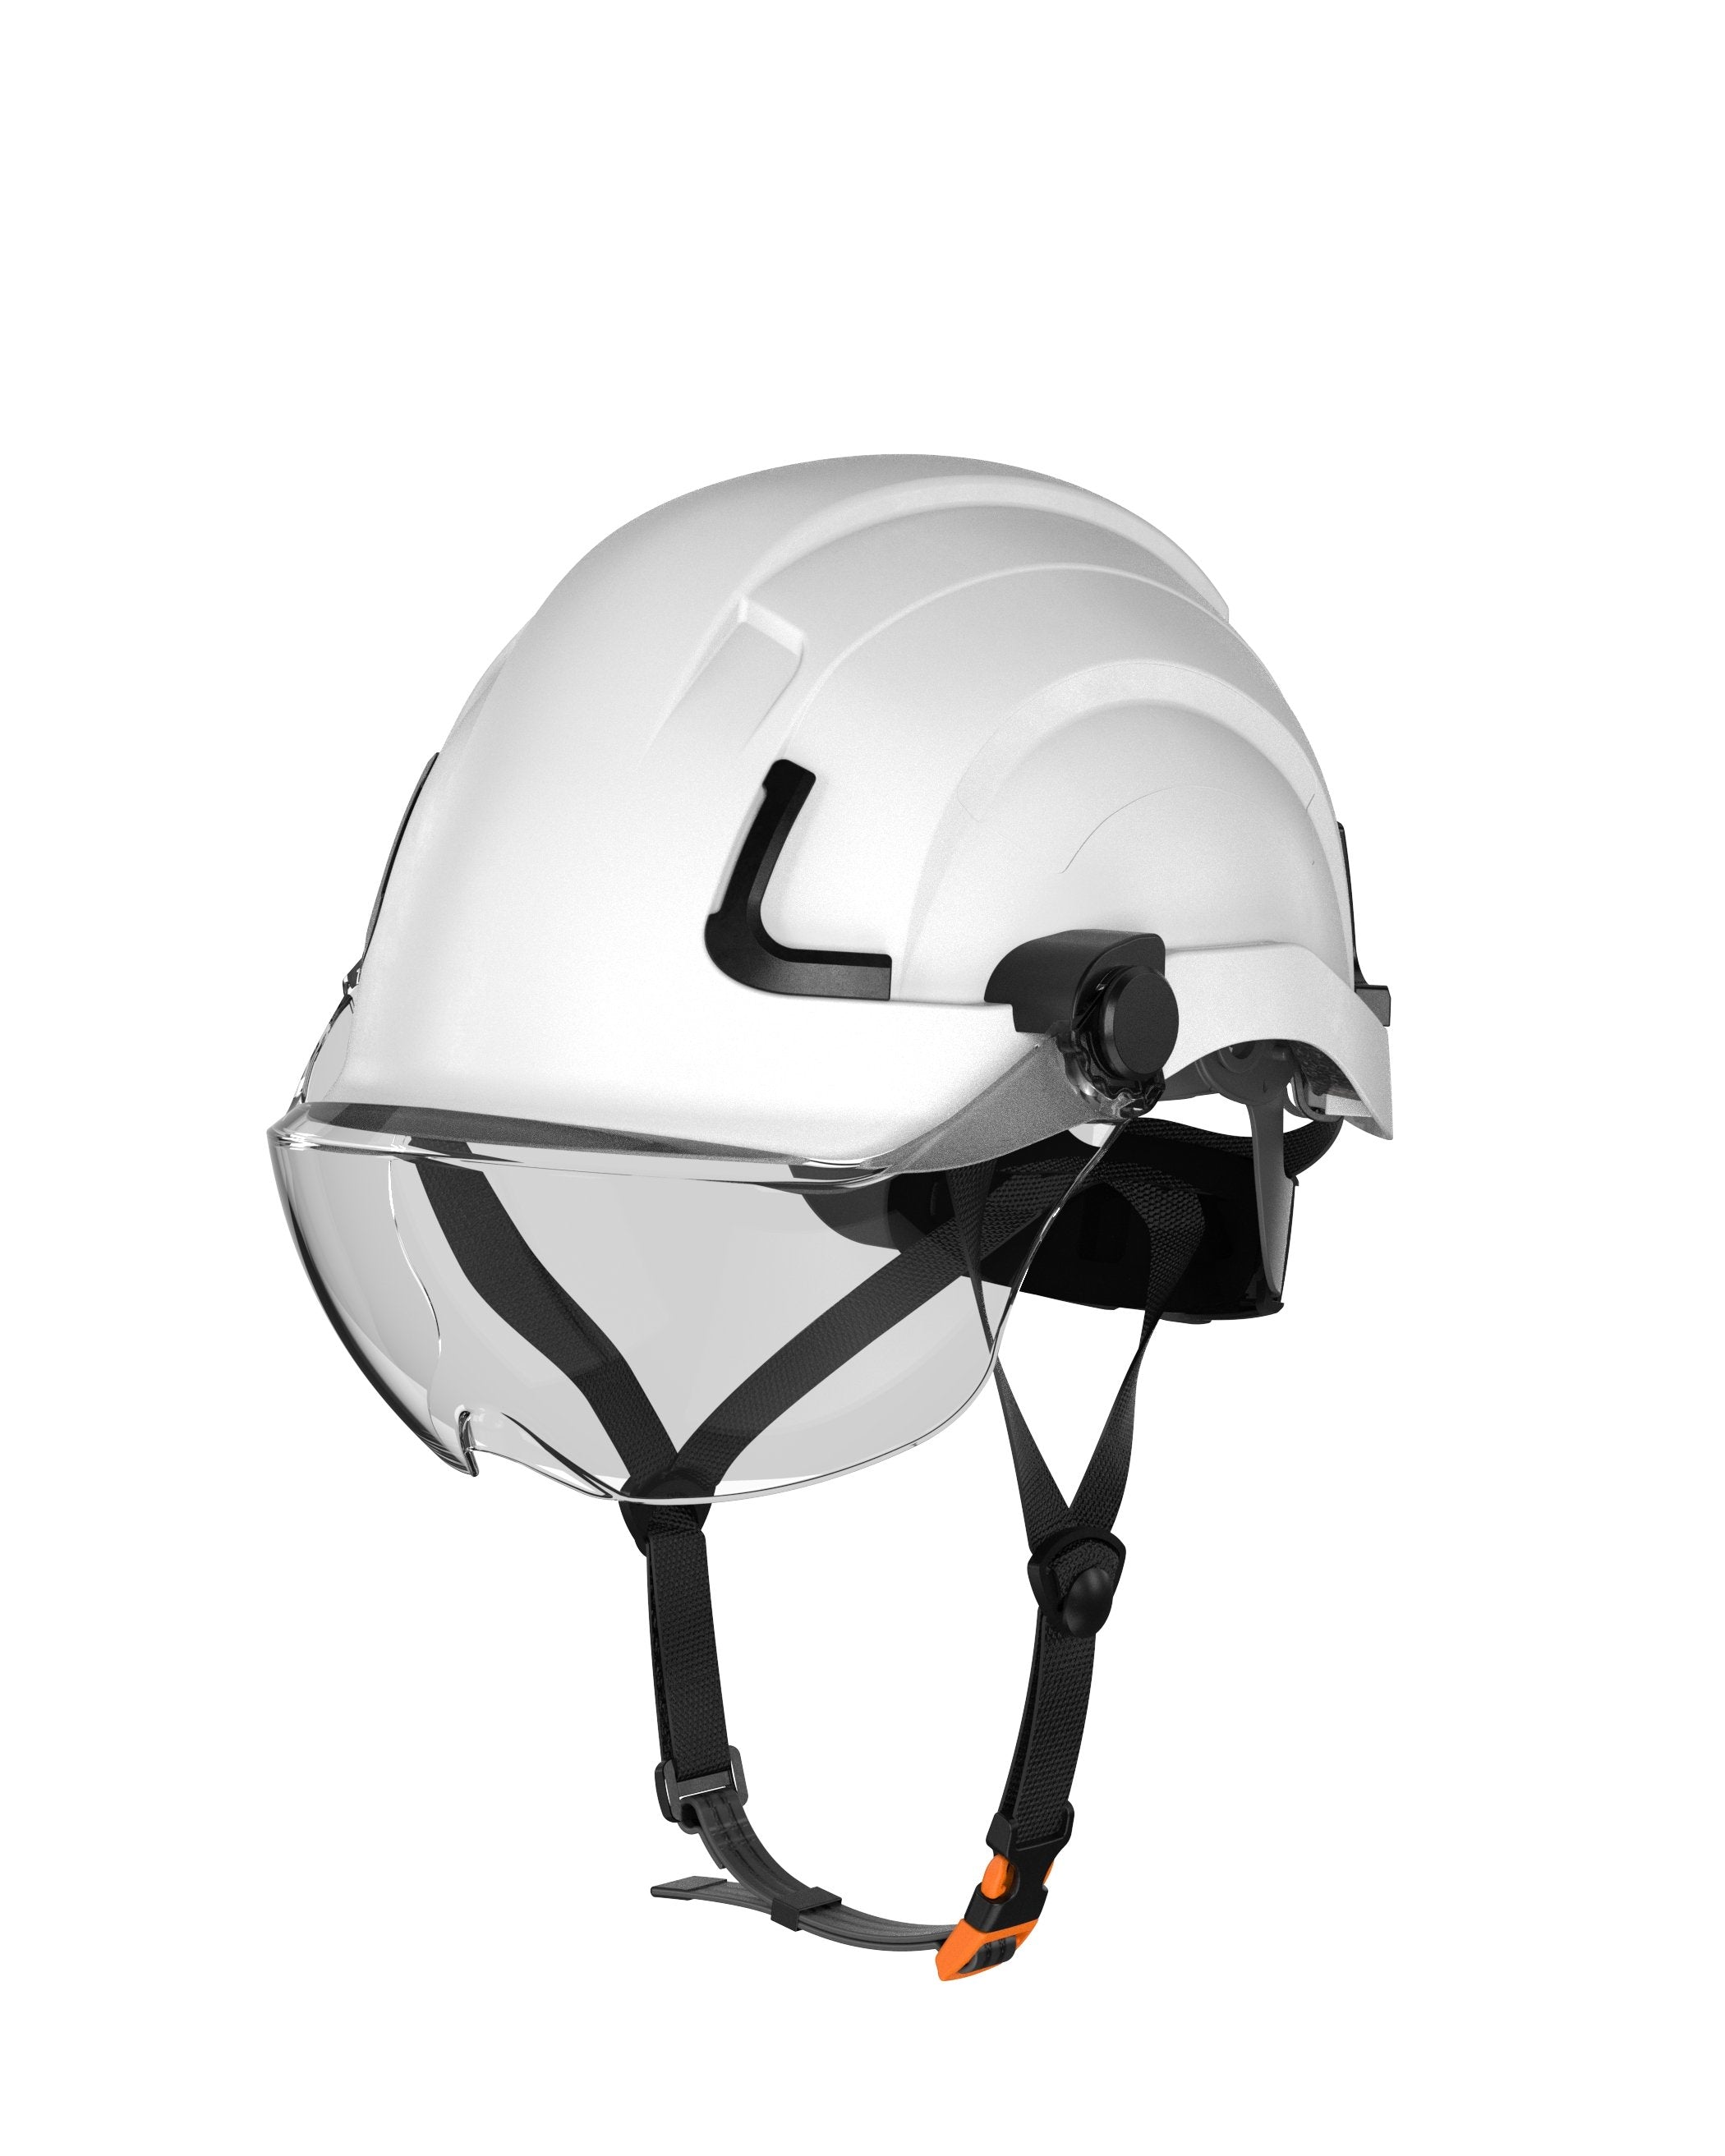 H2-EHV Safety Helmet w/ CLEAR Visor Type Class E, ANSI Z89 and EN124